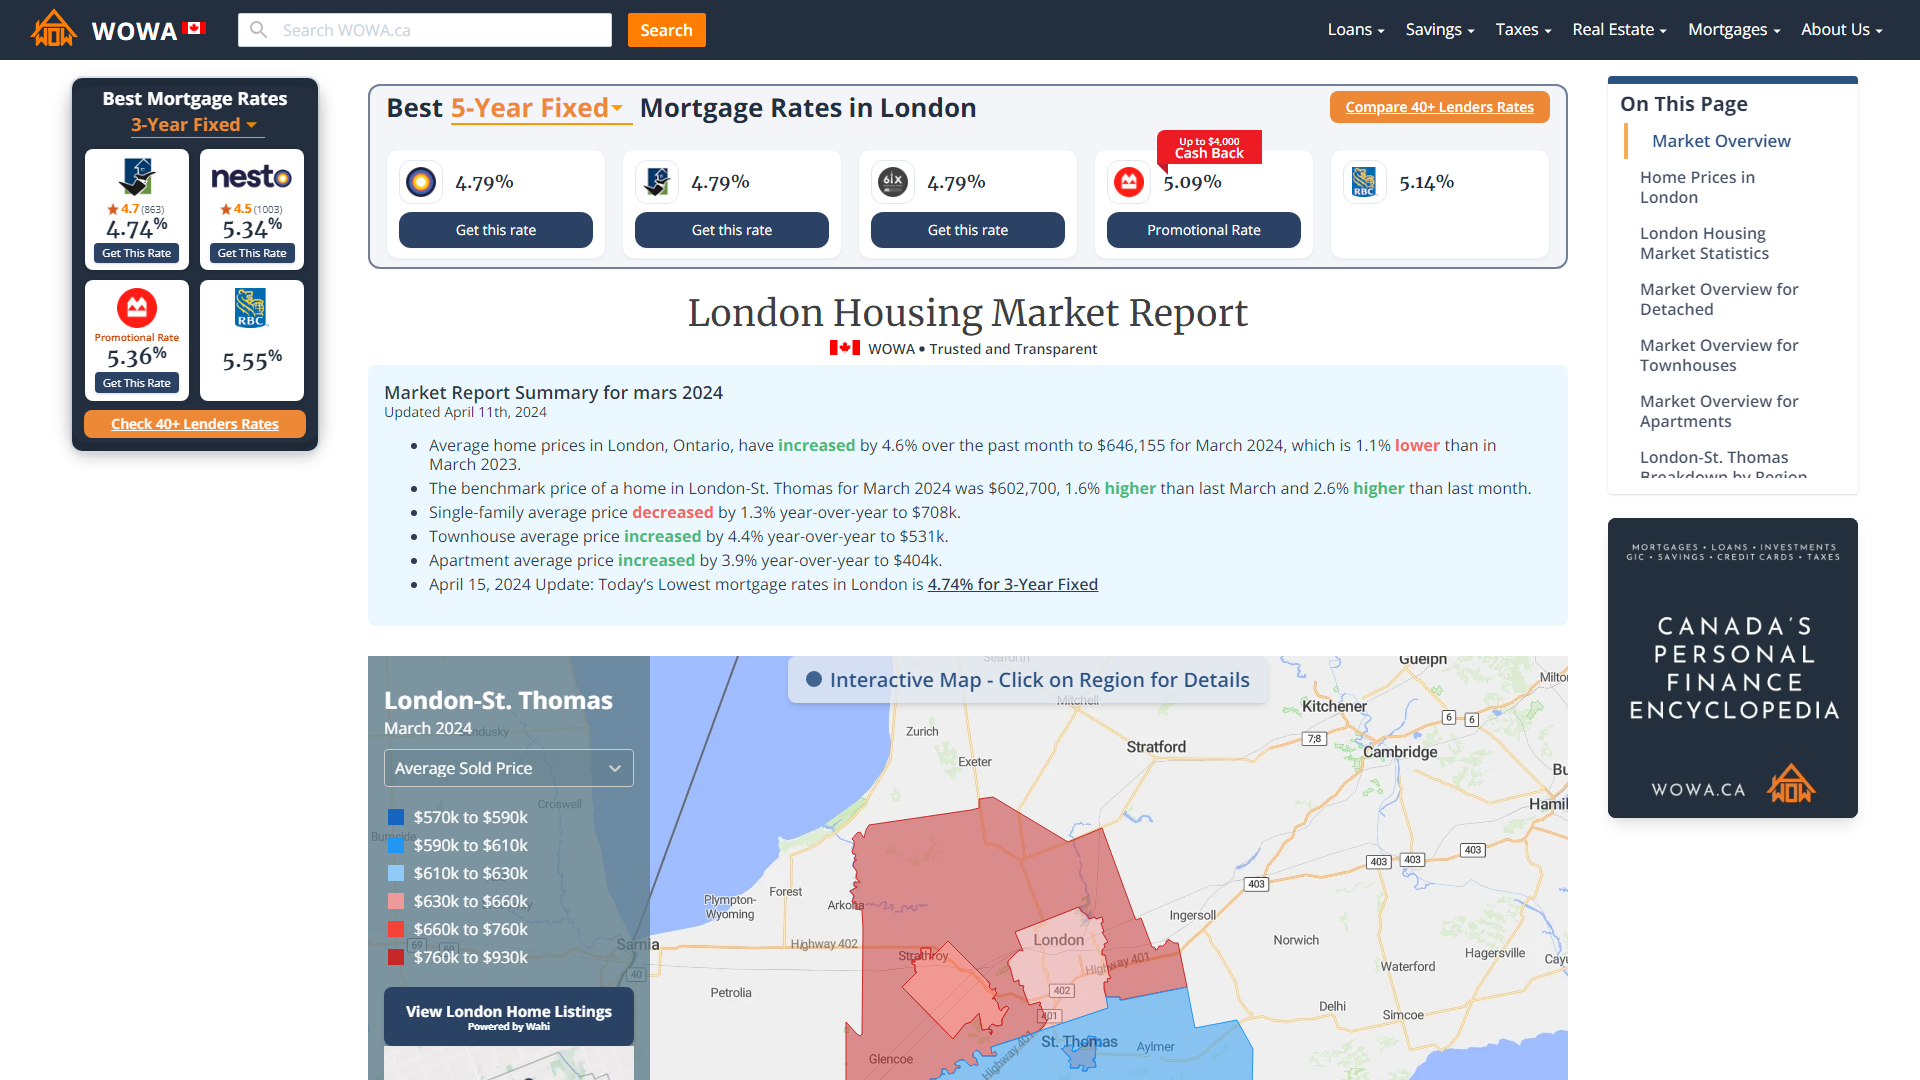 London Housing Market Report Apr. 11th, 2024 Update Interactive Map